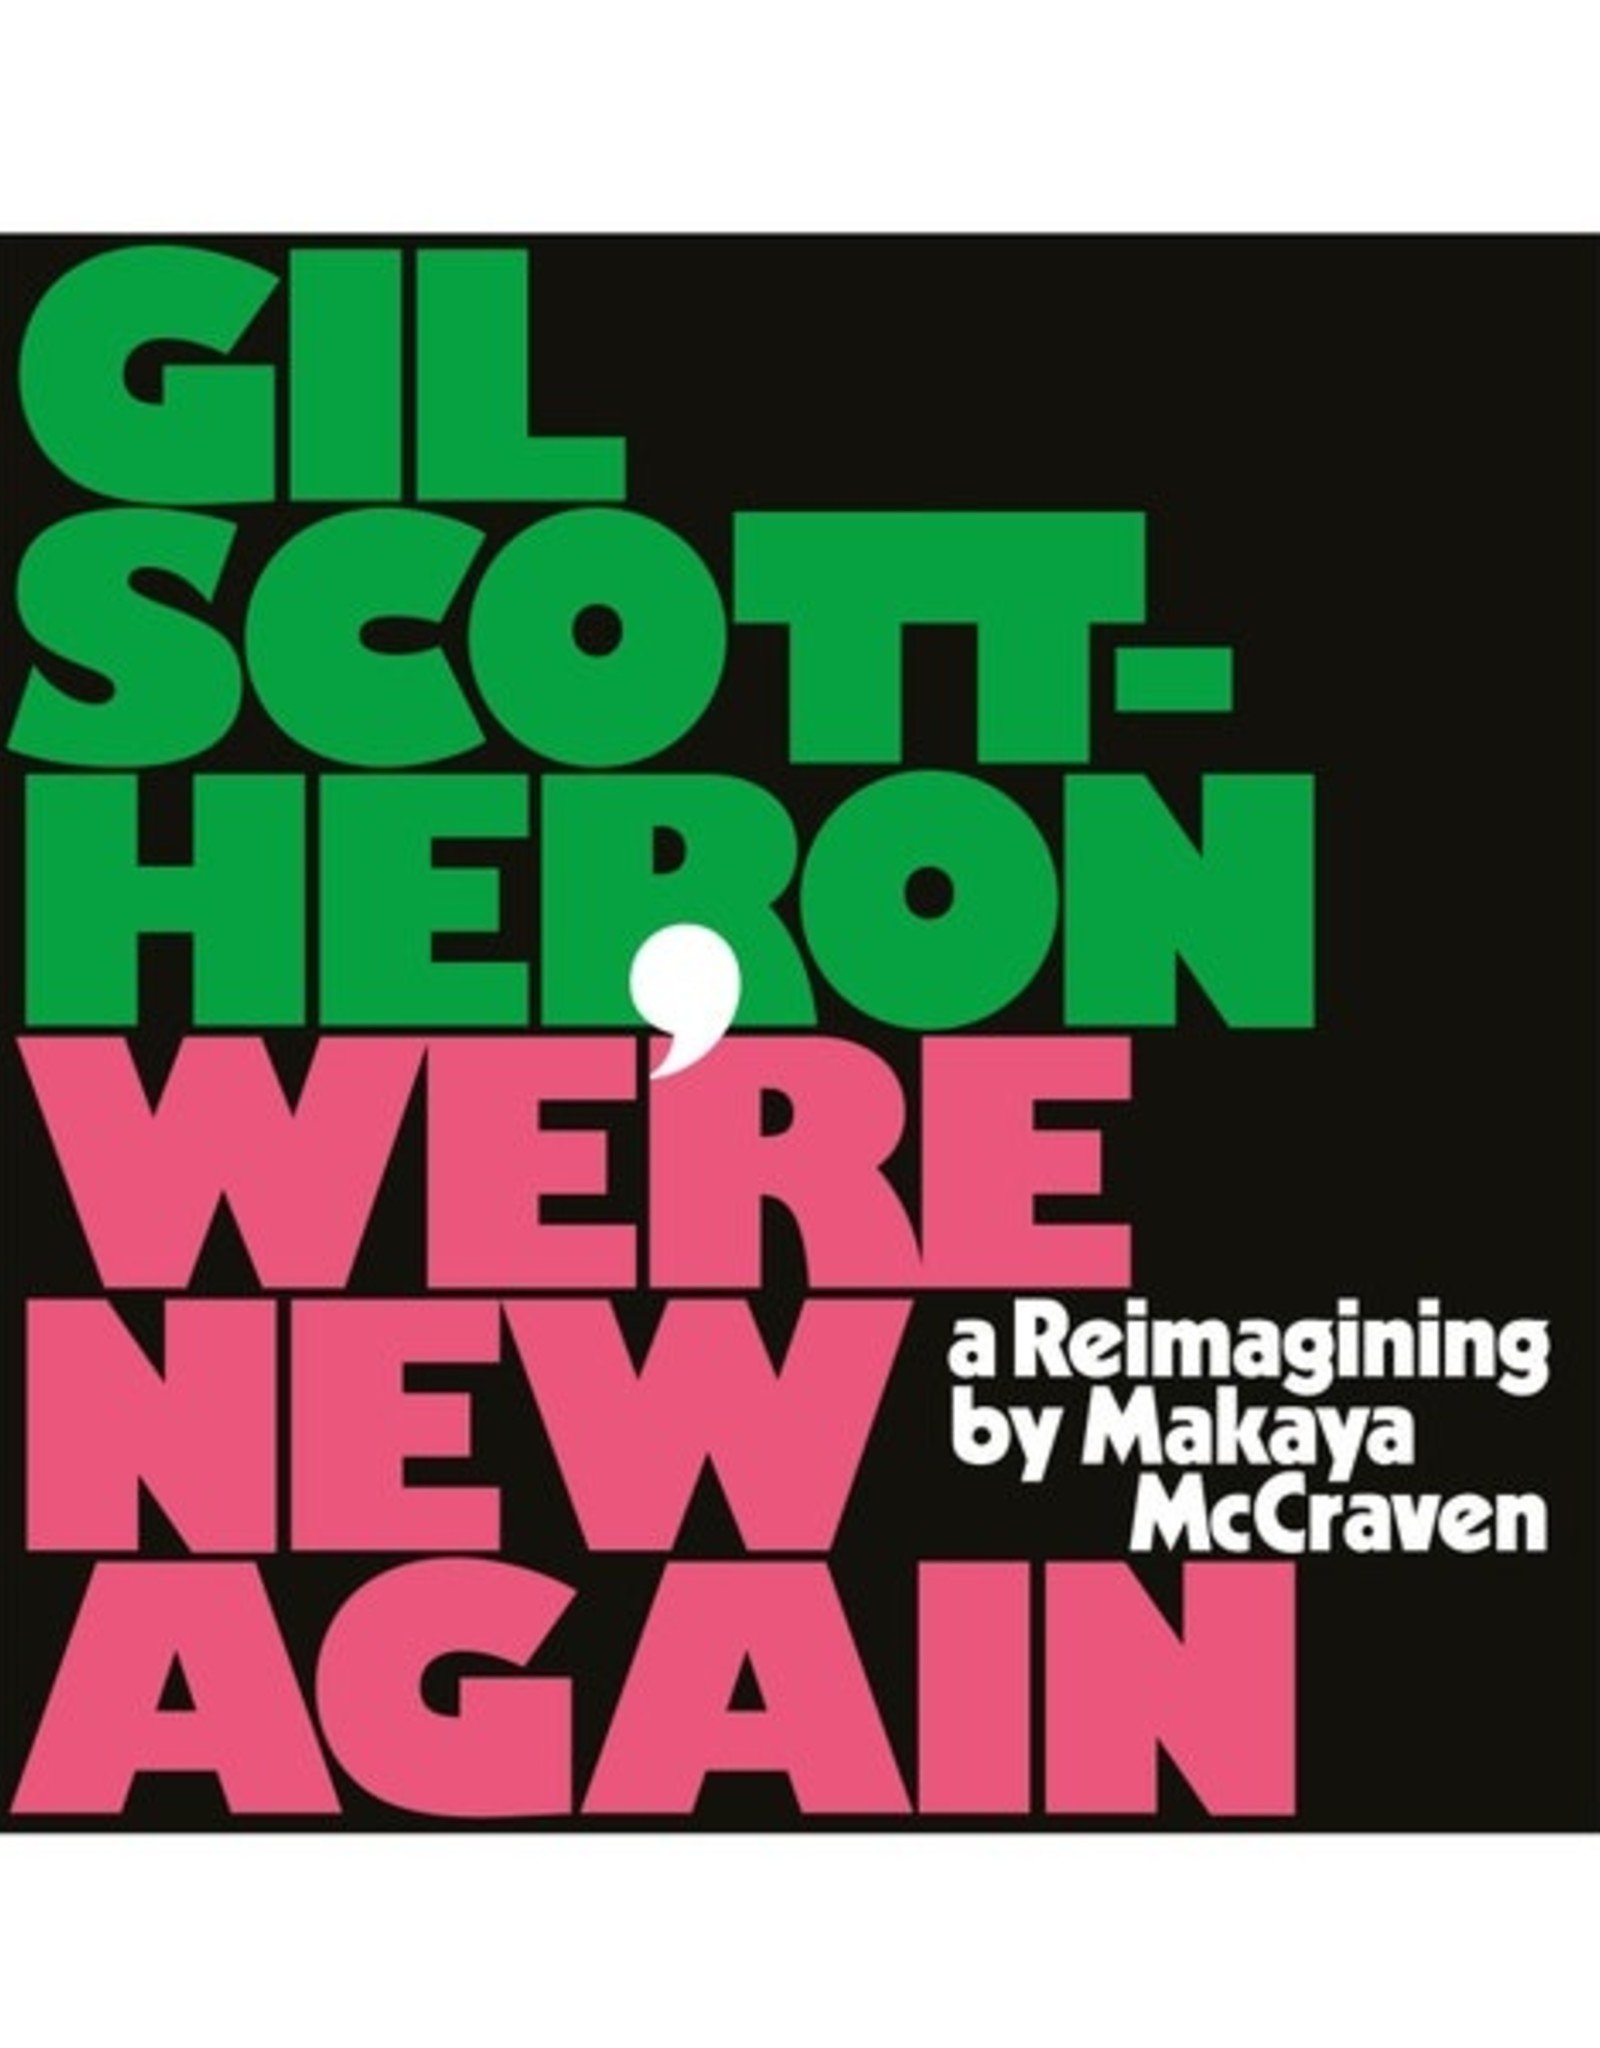 Gil Scott-Heron & Makaya Mccraven - We're New Again